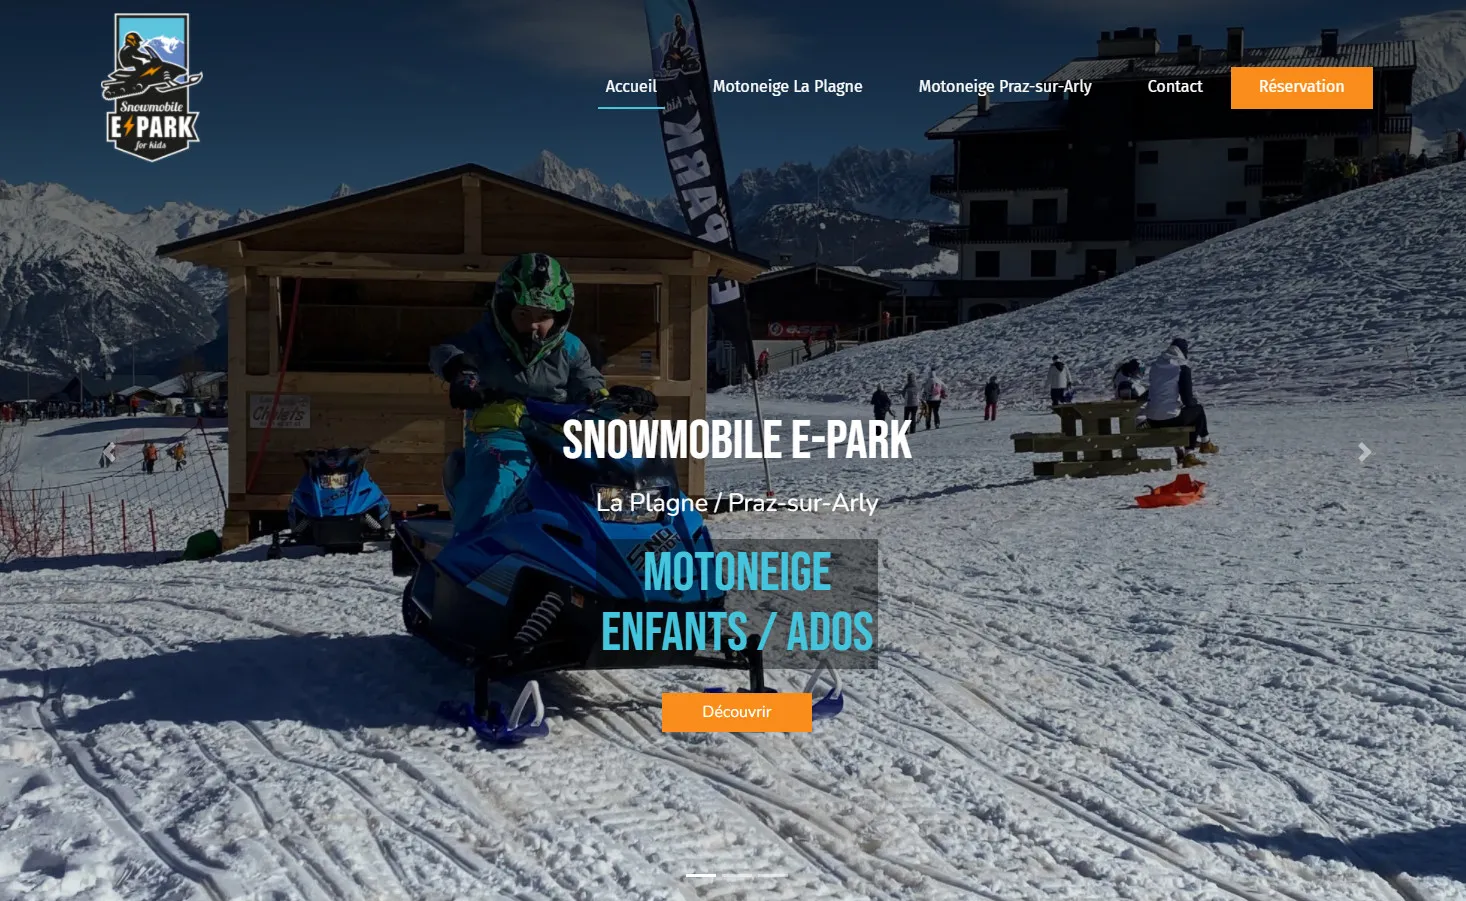 Snowmobile E-park